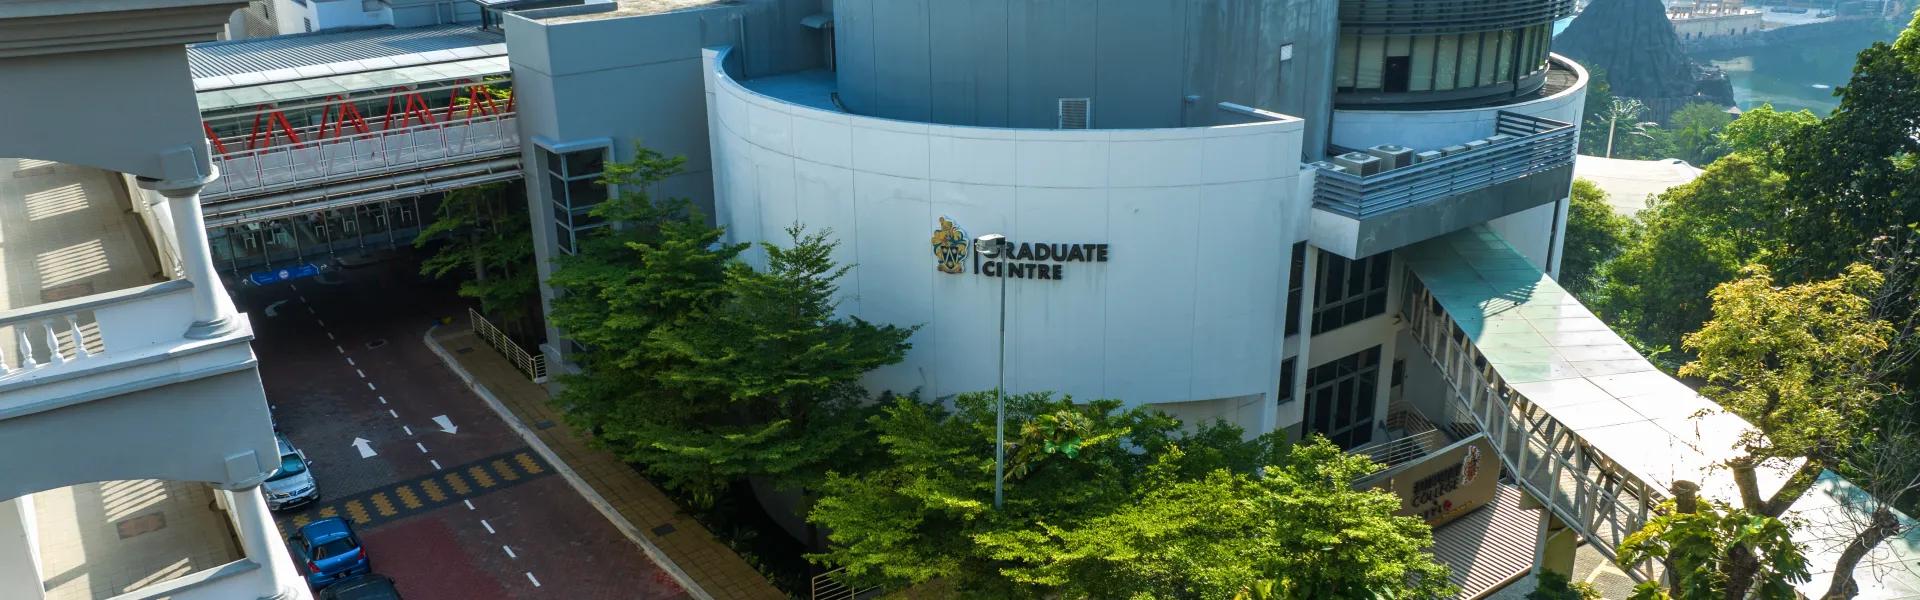 Graduate Centre